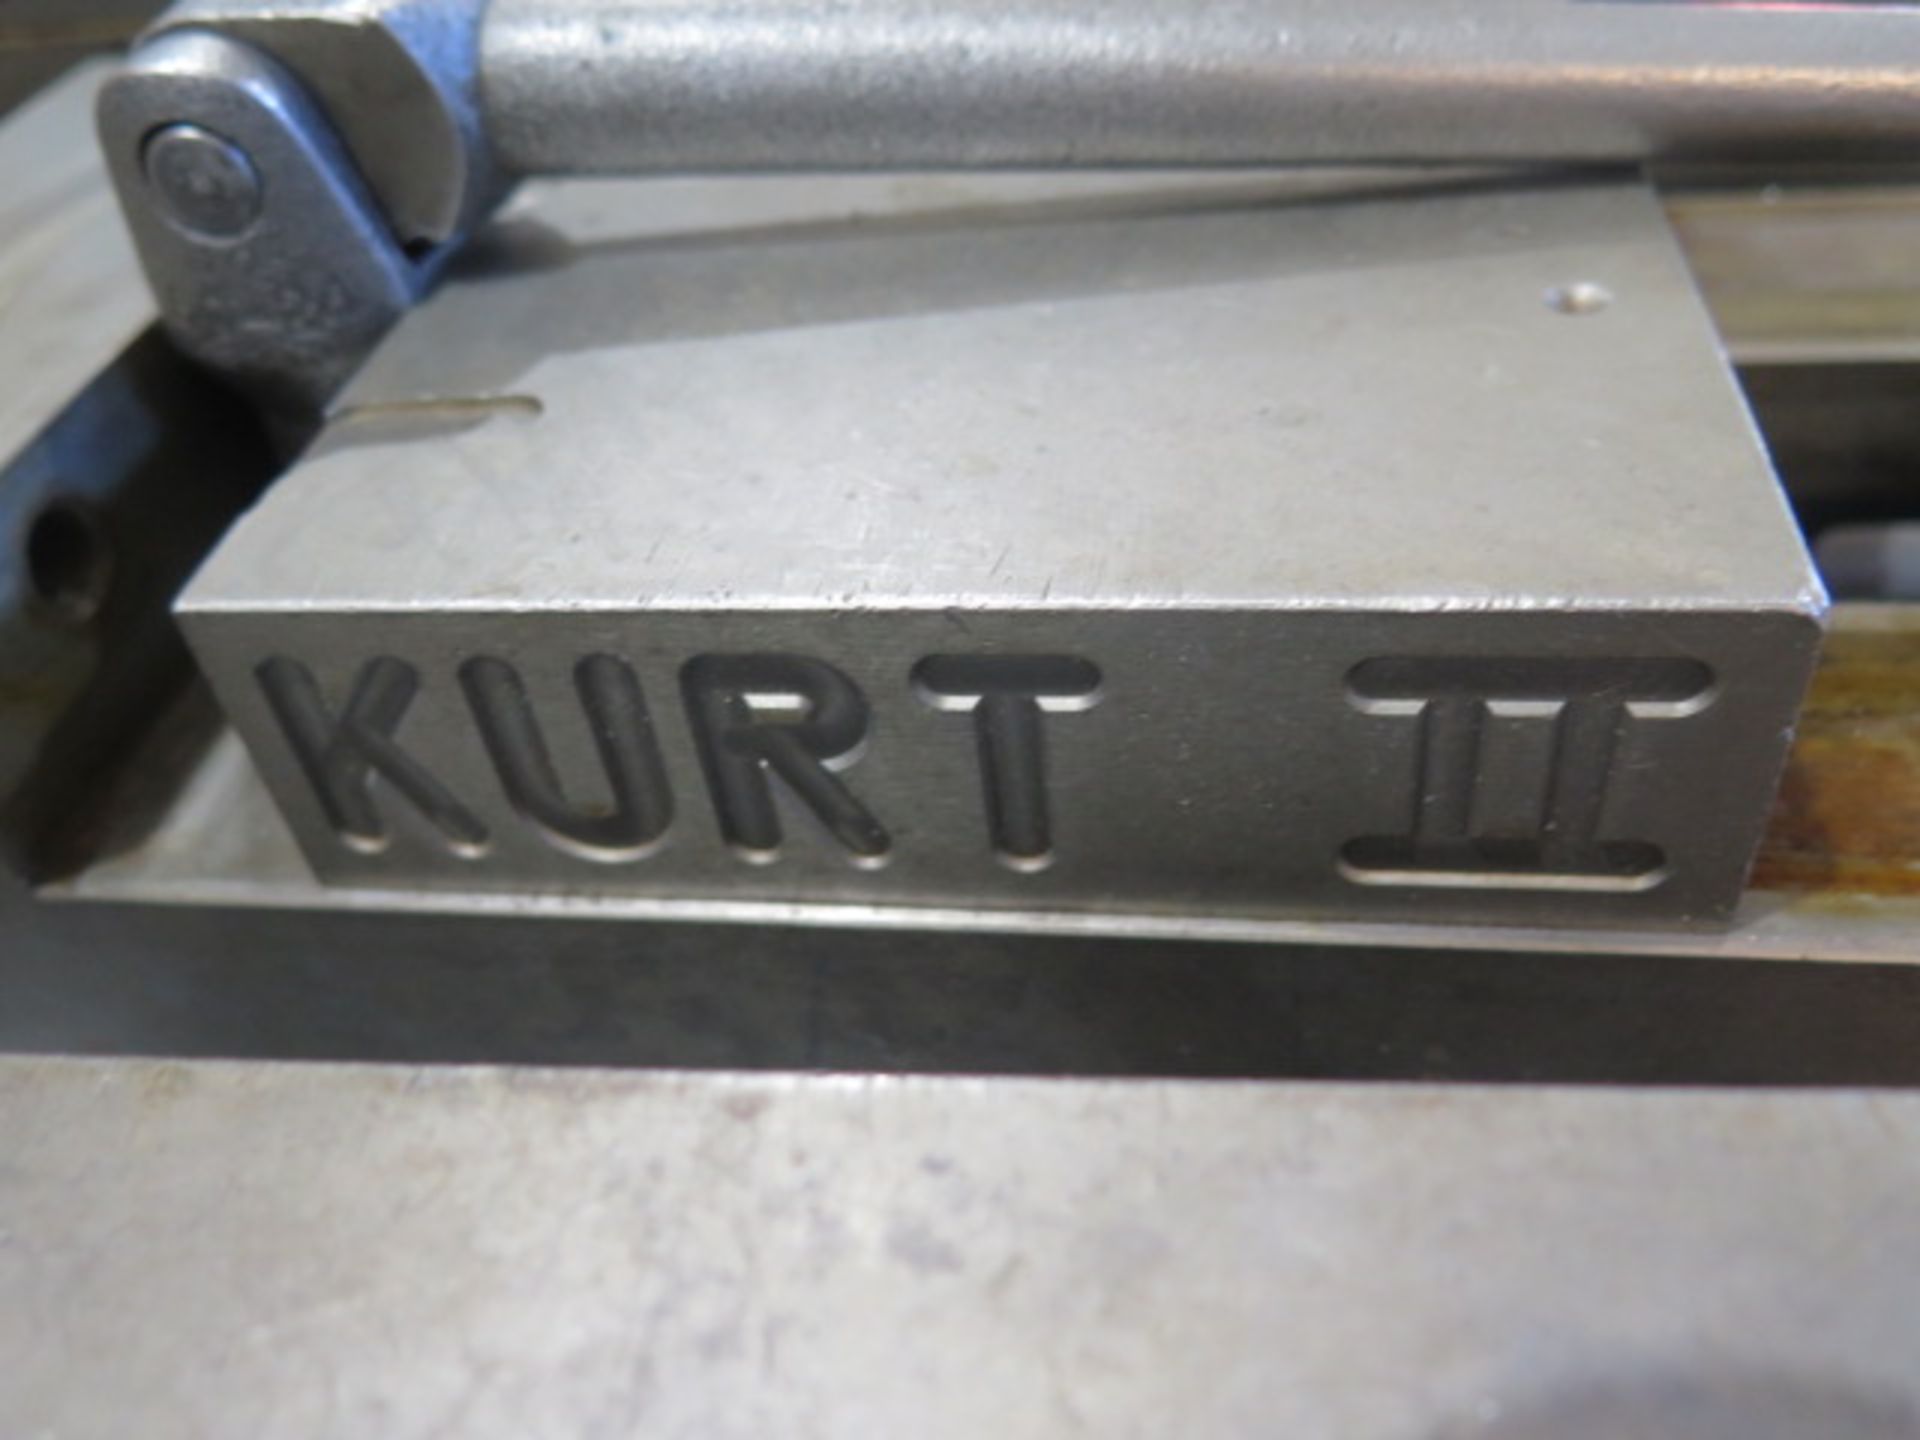 Kurt II 6" Angle-Lock Vise (SOLD AS-IS - NO WARRANTY) - Image 3 of 3